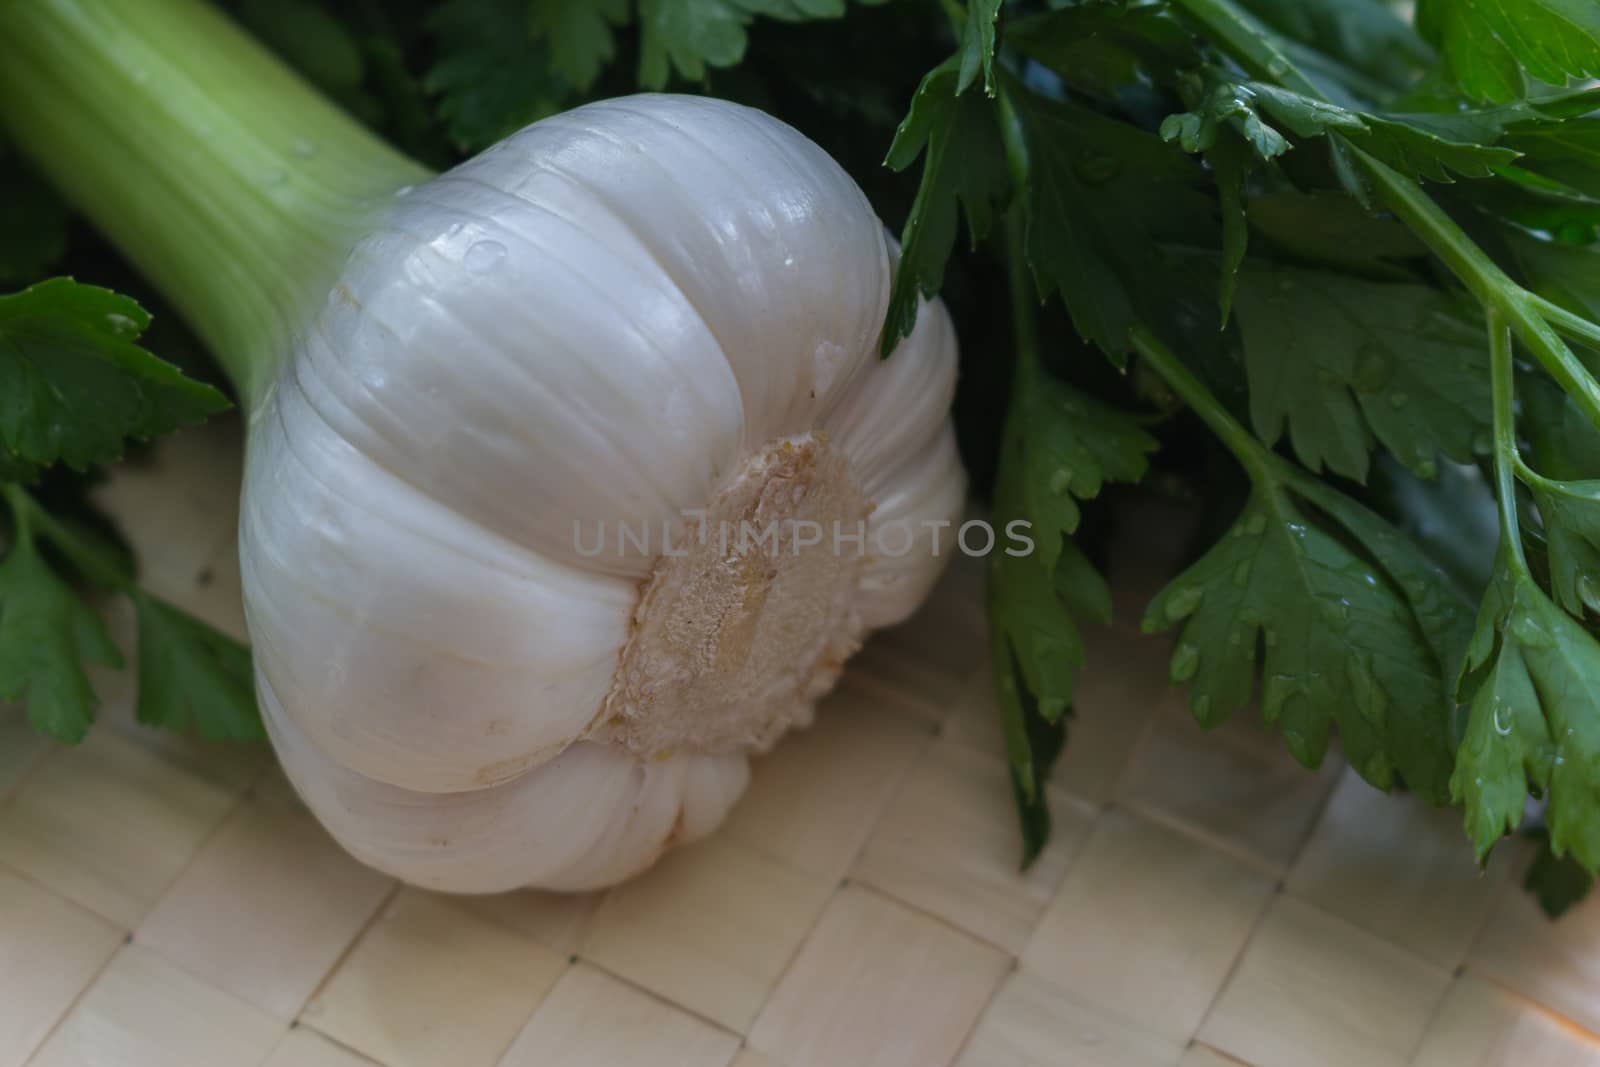 Austrian Fresh garlic close-up